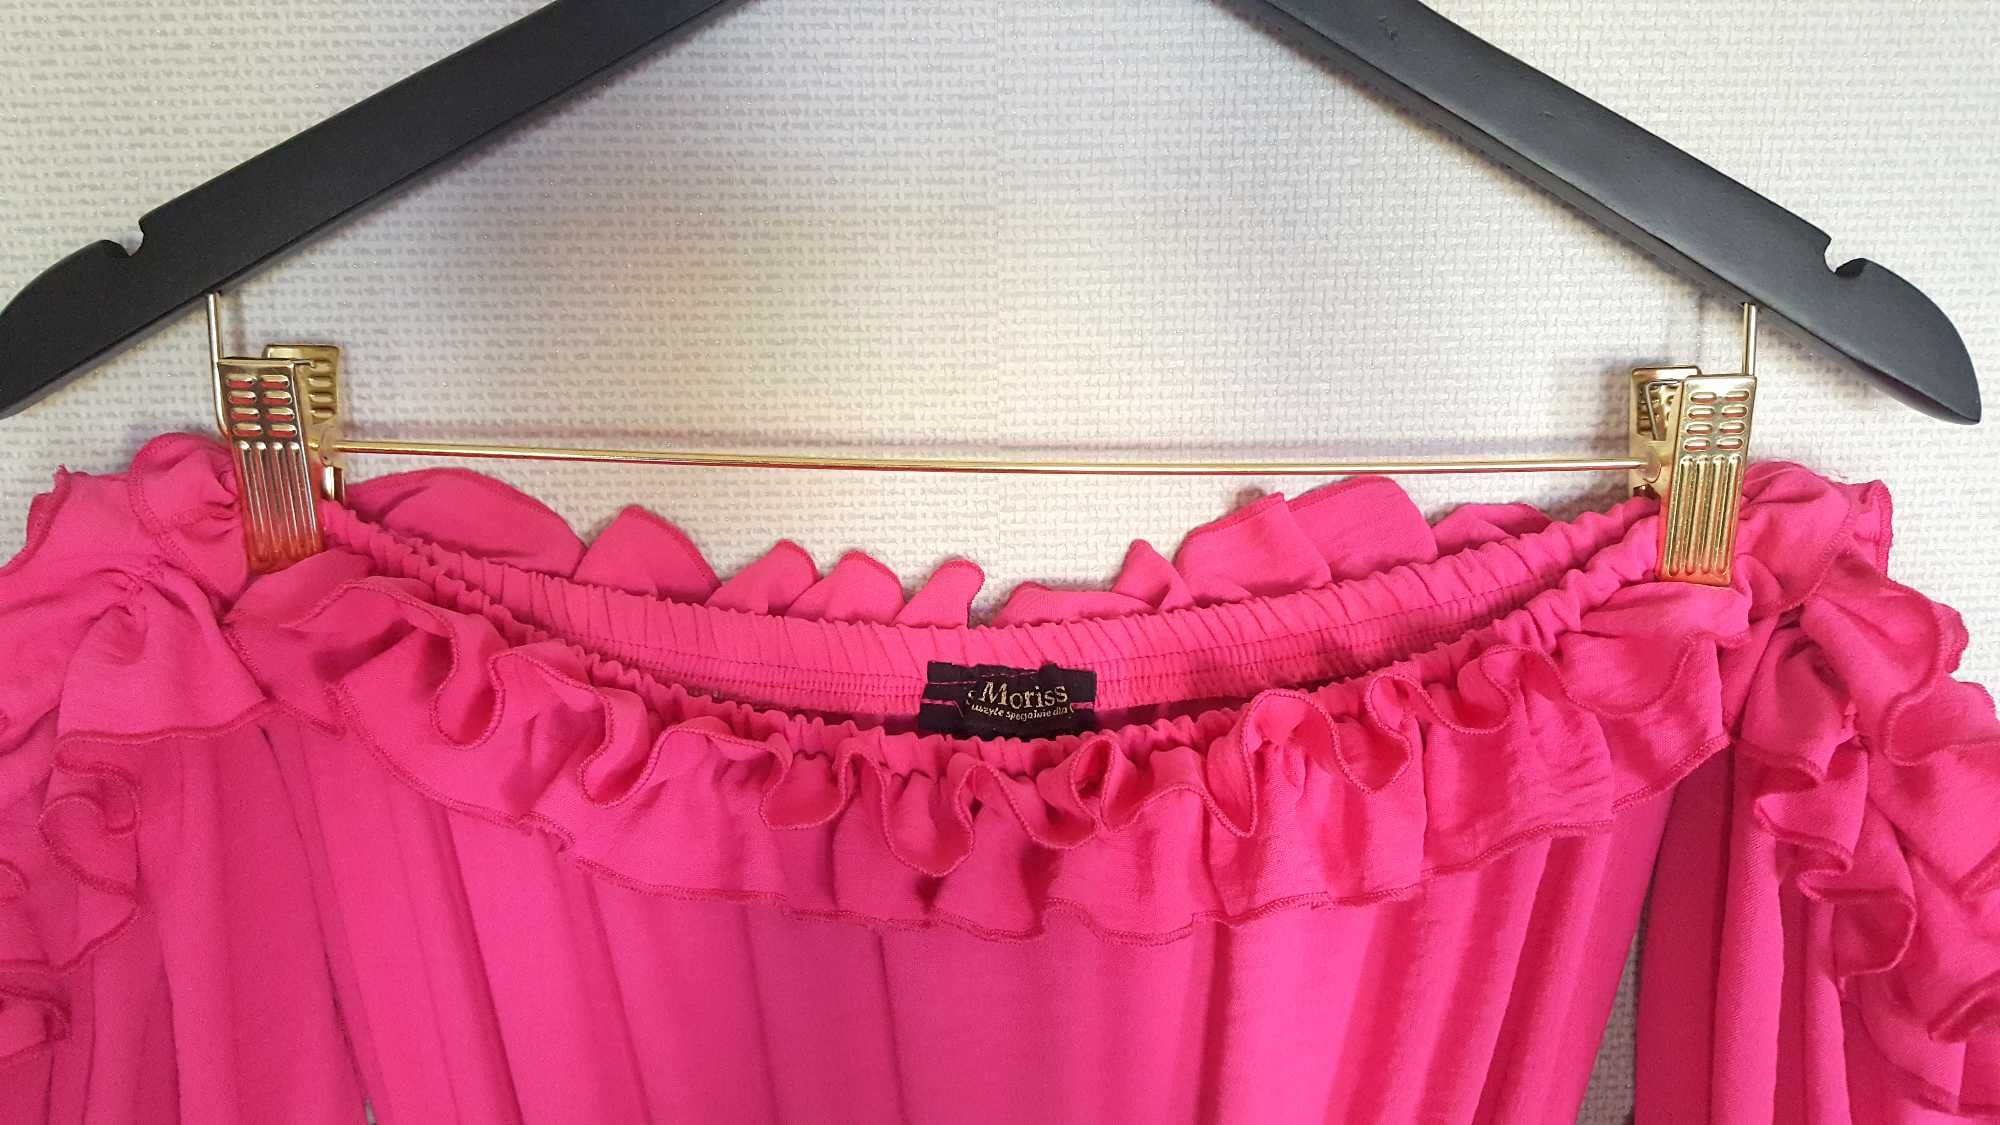 S.MORISS różowa asymetryczna sukienka hiszpanka fuksja